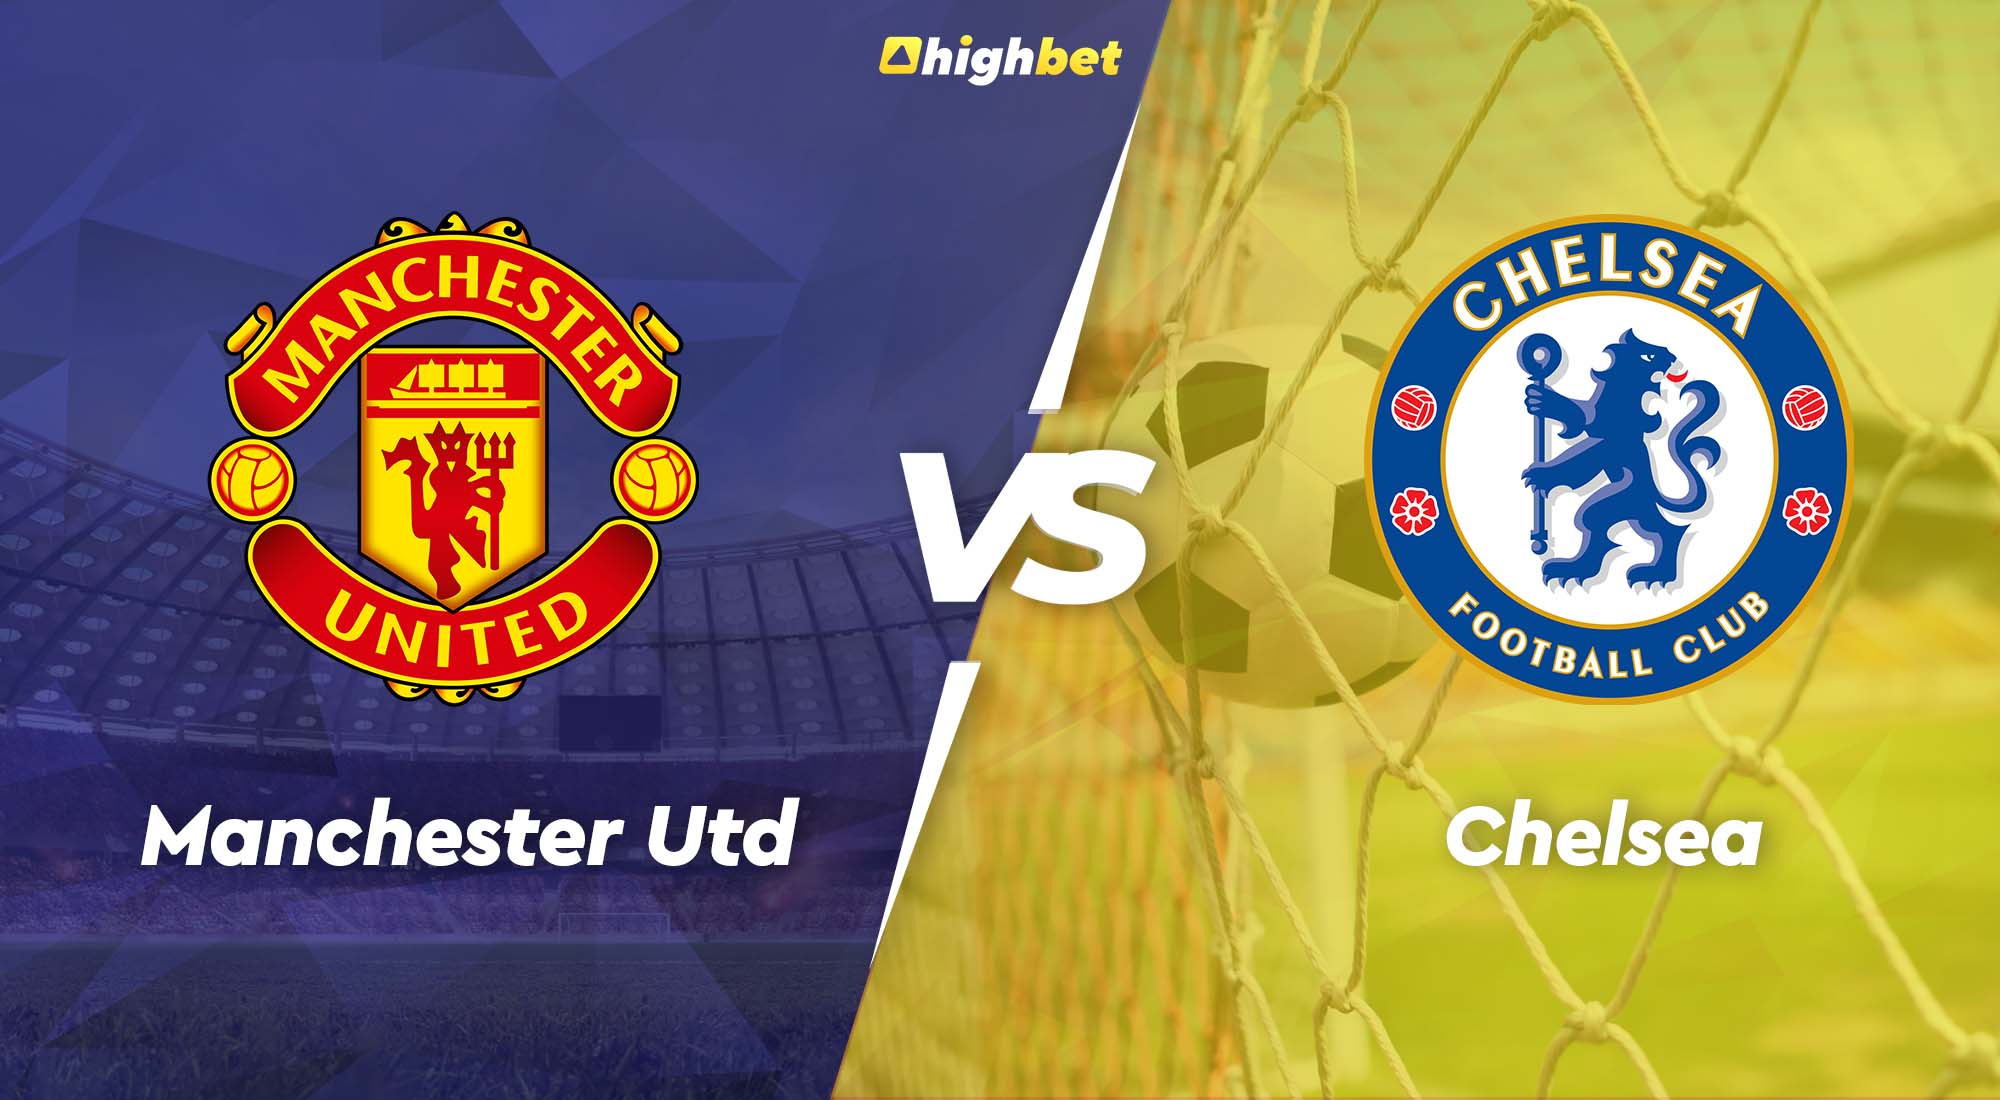 Manchester United vs Chelsea - highbet Premier League Pre-Match Analysis